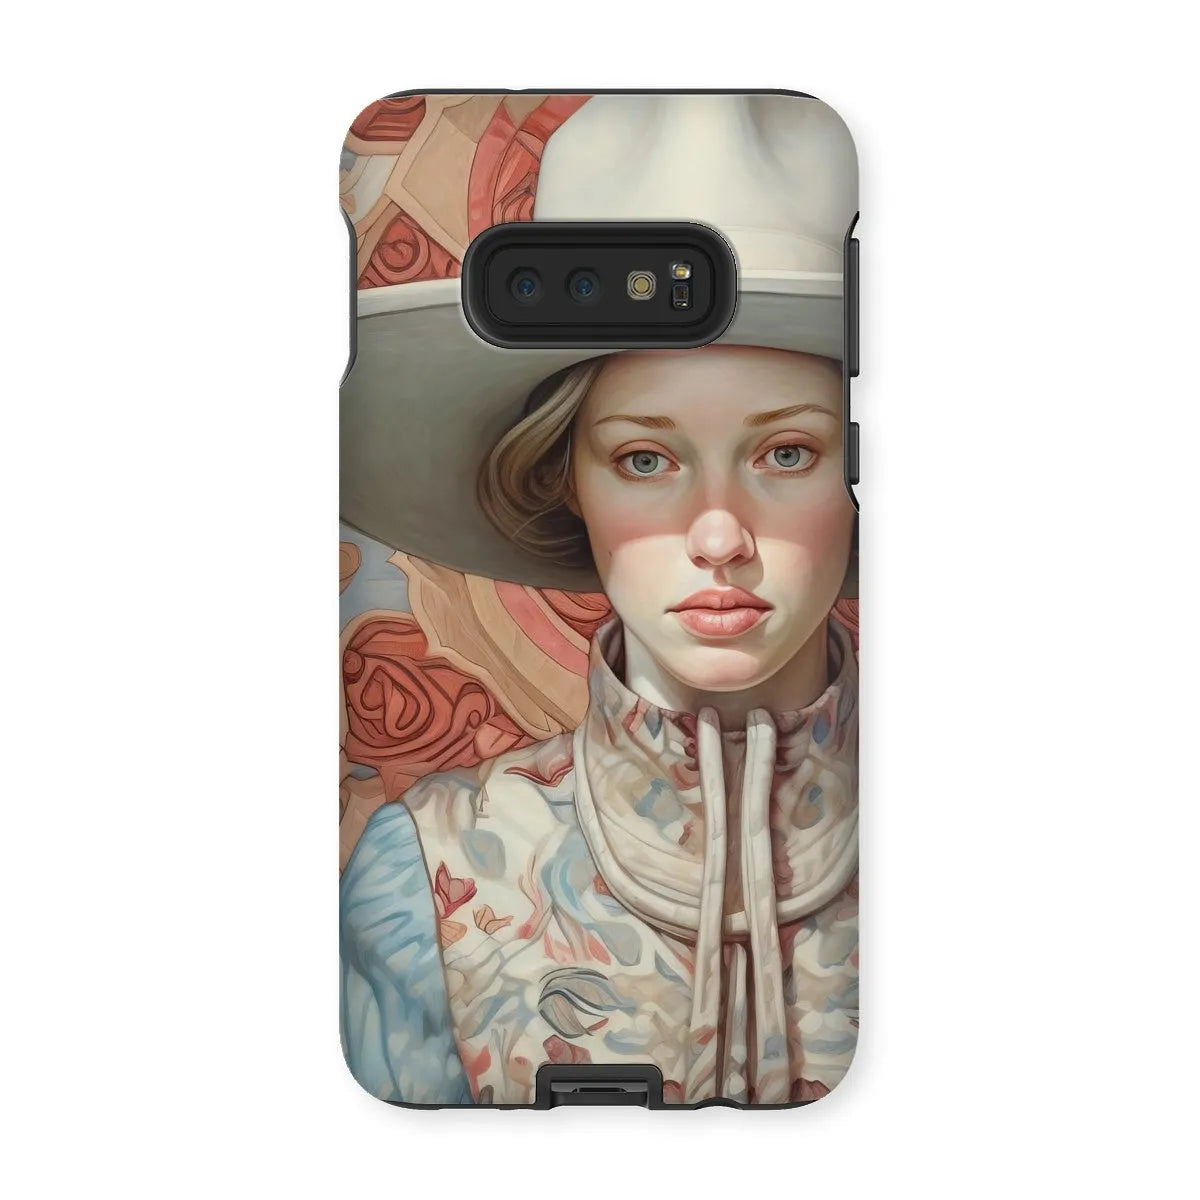 Lottie The Lesbian Cowgirl - Sapphic Art Phone Case - Samsung Galaxy S10e / Matte - Mobile Phone Cases - Aesthetic Art